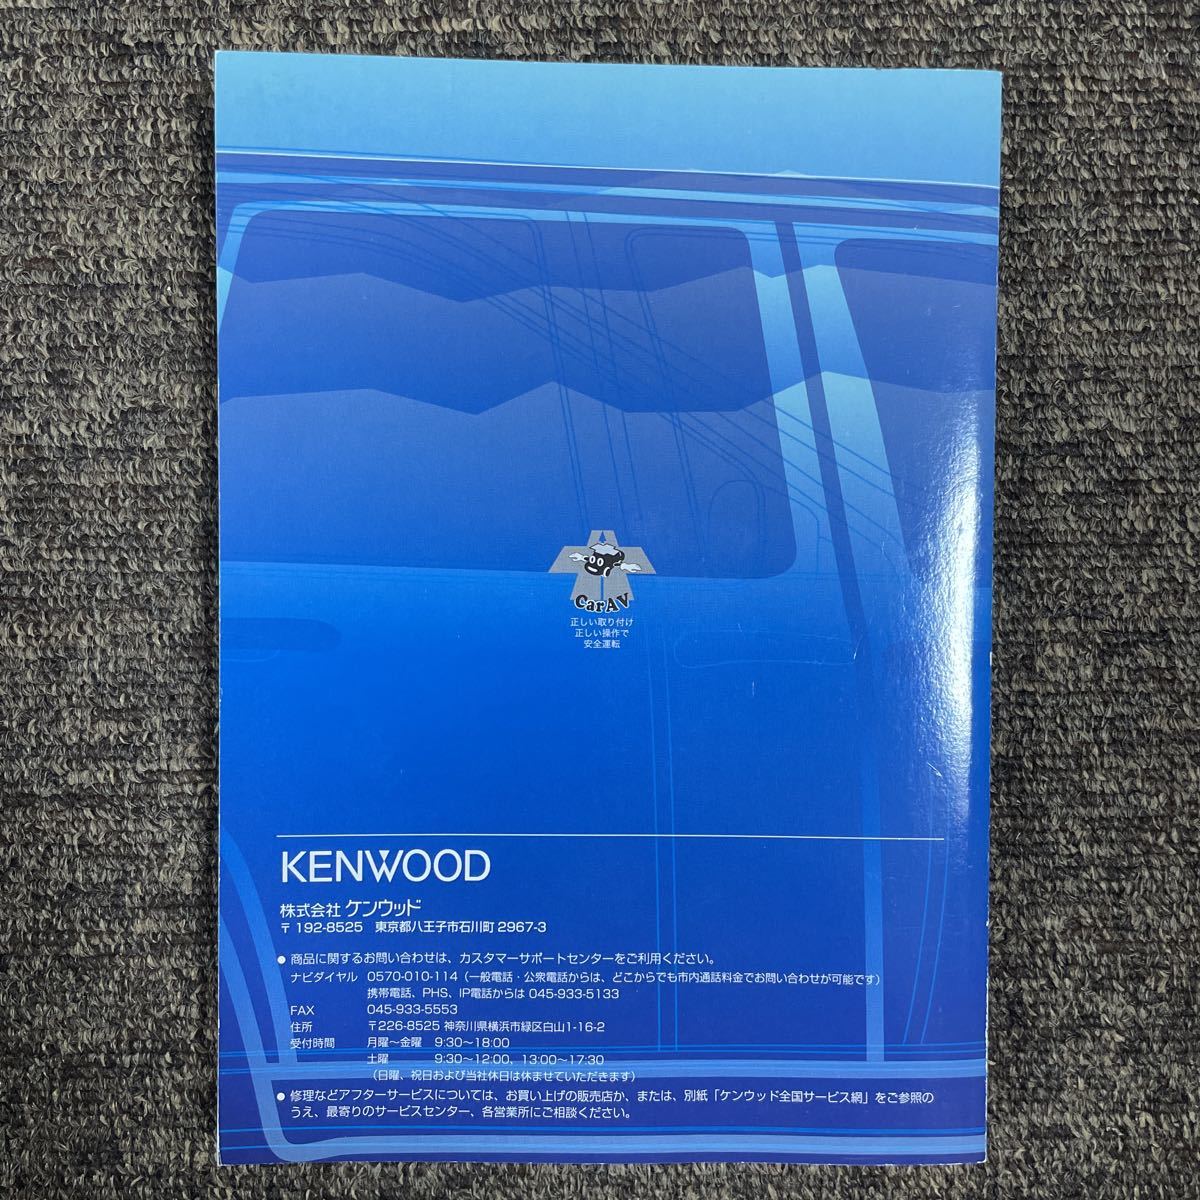 KENWOOD ケンウッド HDDナビ HDV-999 HDV-790 取扱説明書